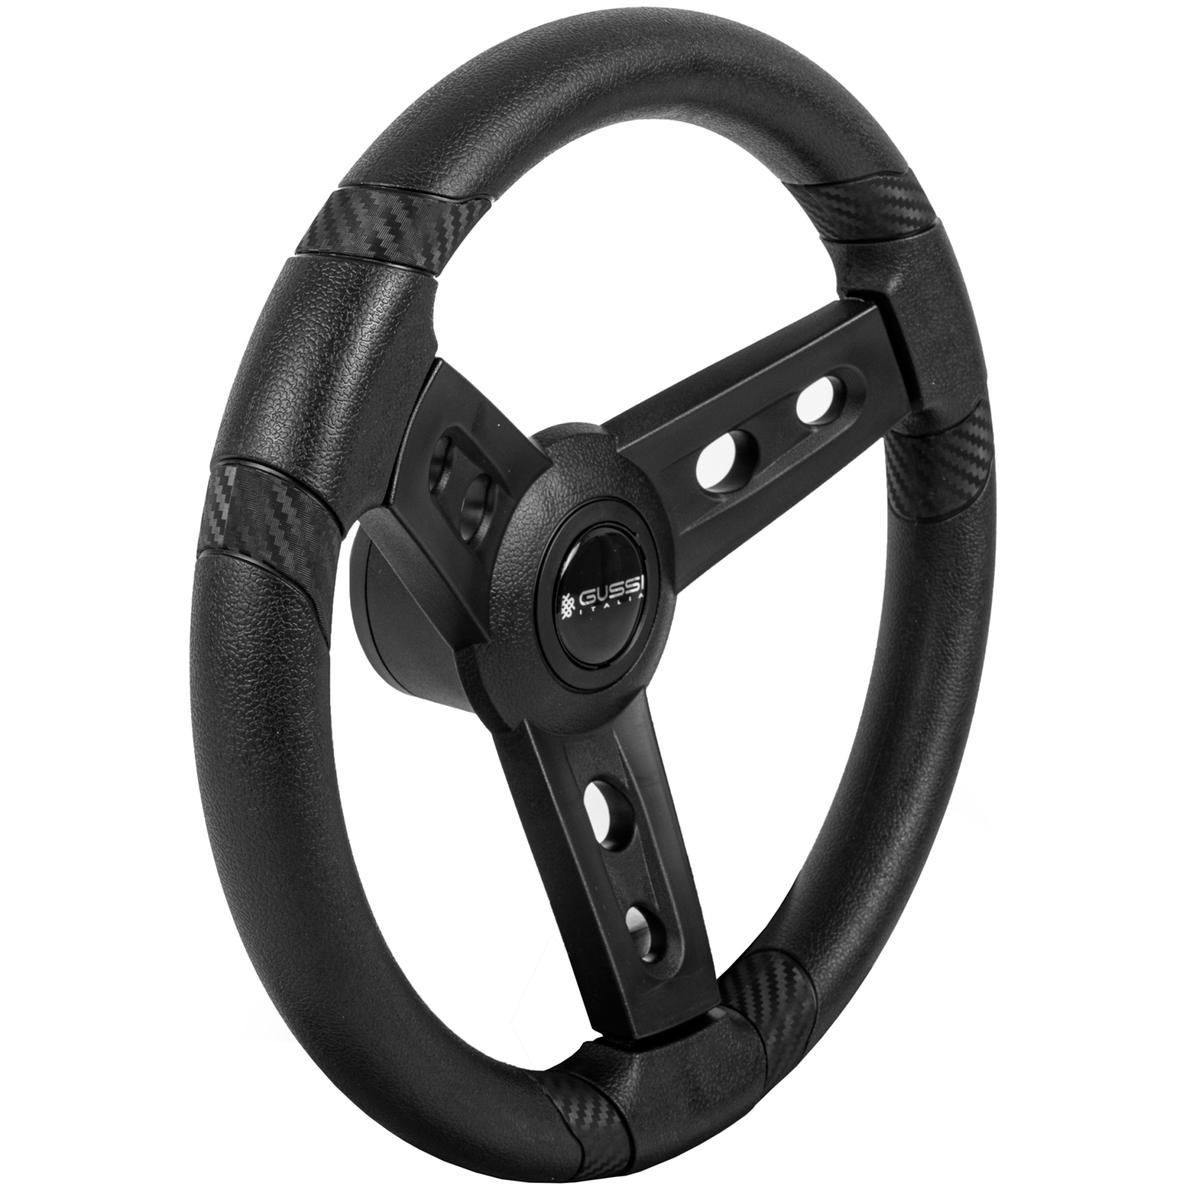 Gussi Italia® Lugana Black Steering Wheel Compatible with ICON Golf Car Models & AEV Golf Car Models